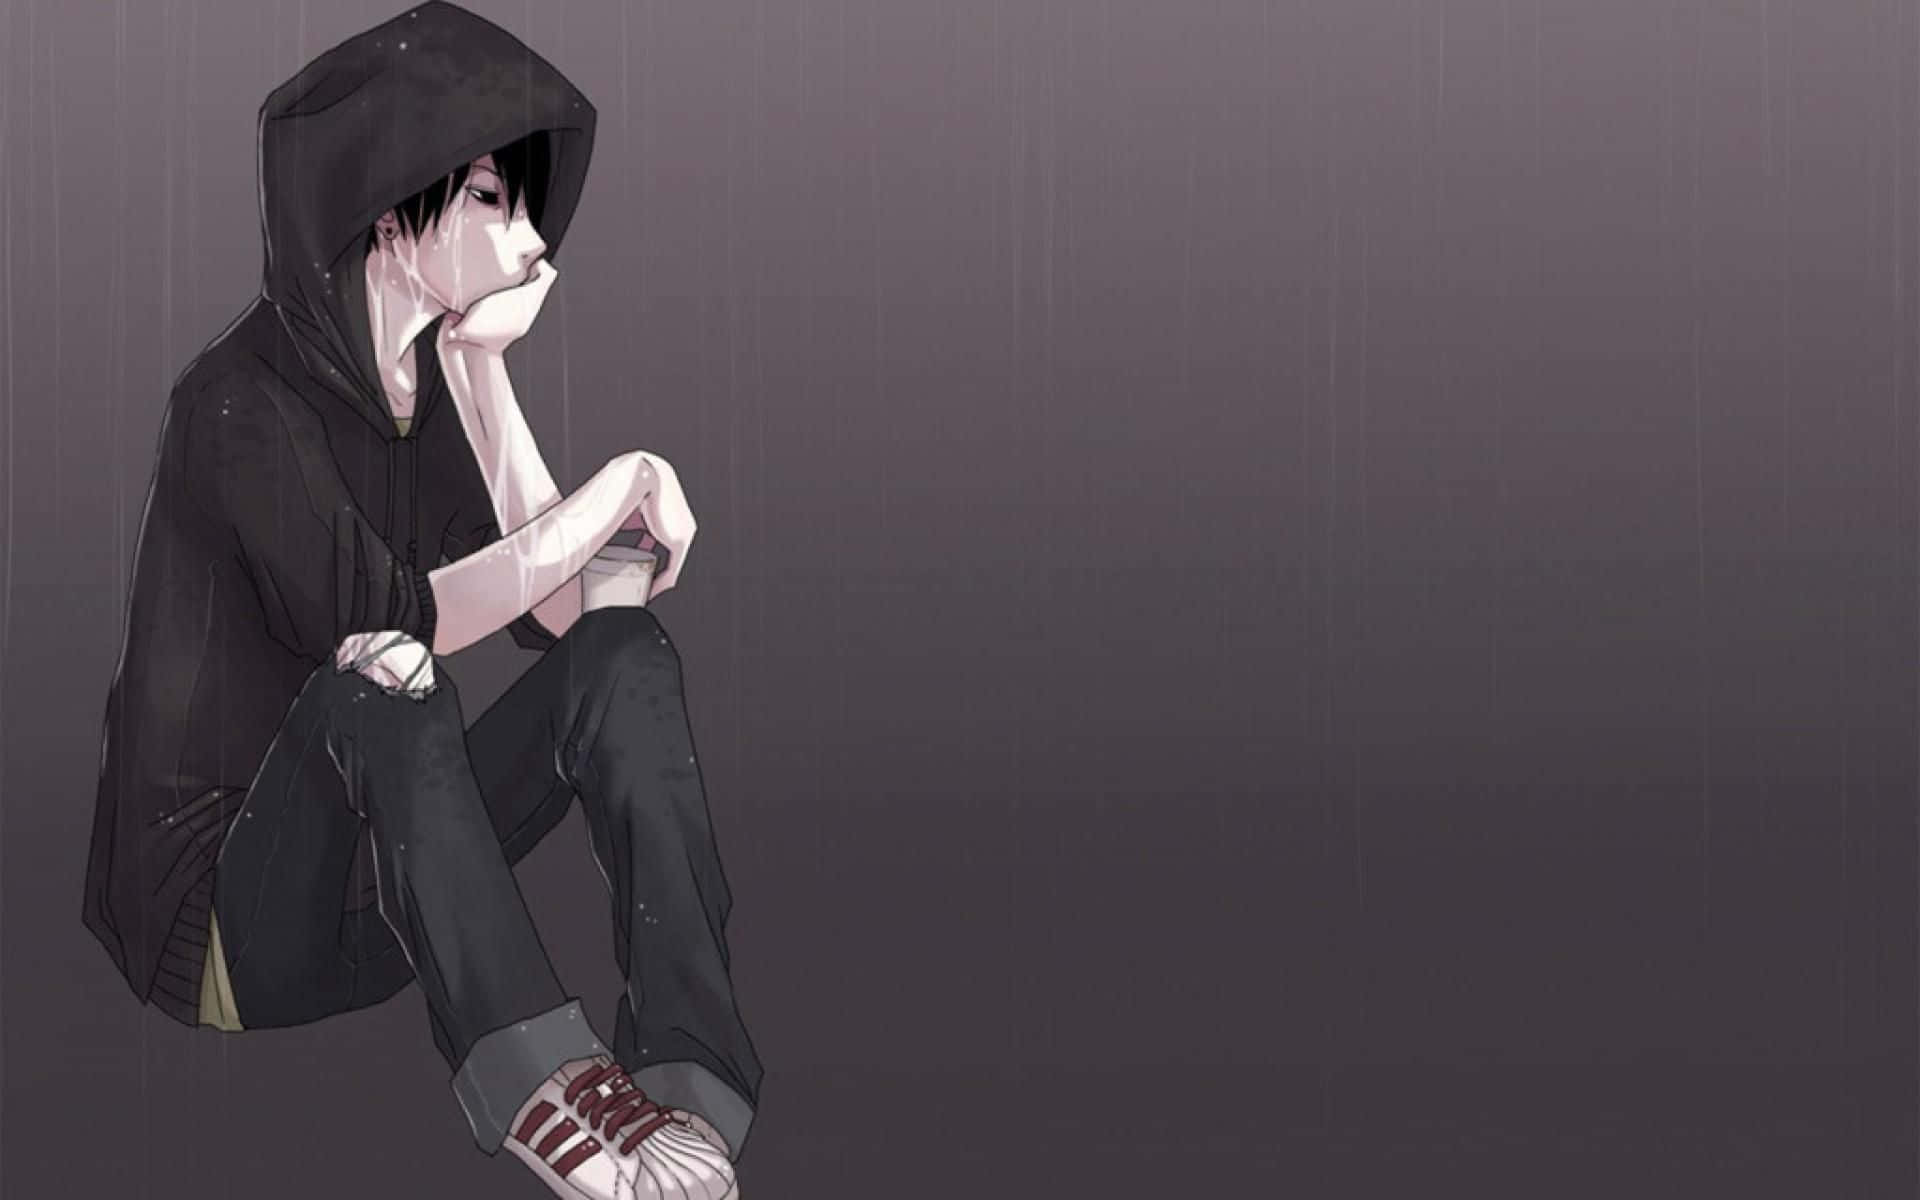 A Dark Anime Boy Peeking Out from the Shadows Wallpaper